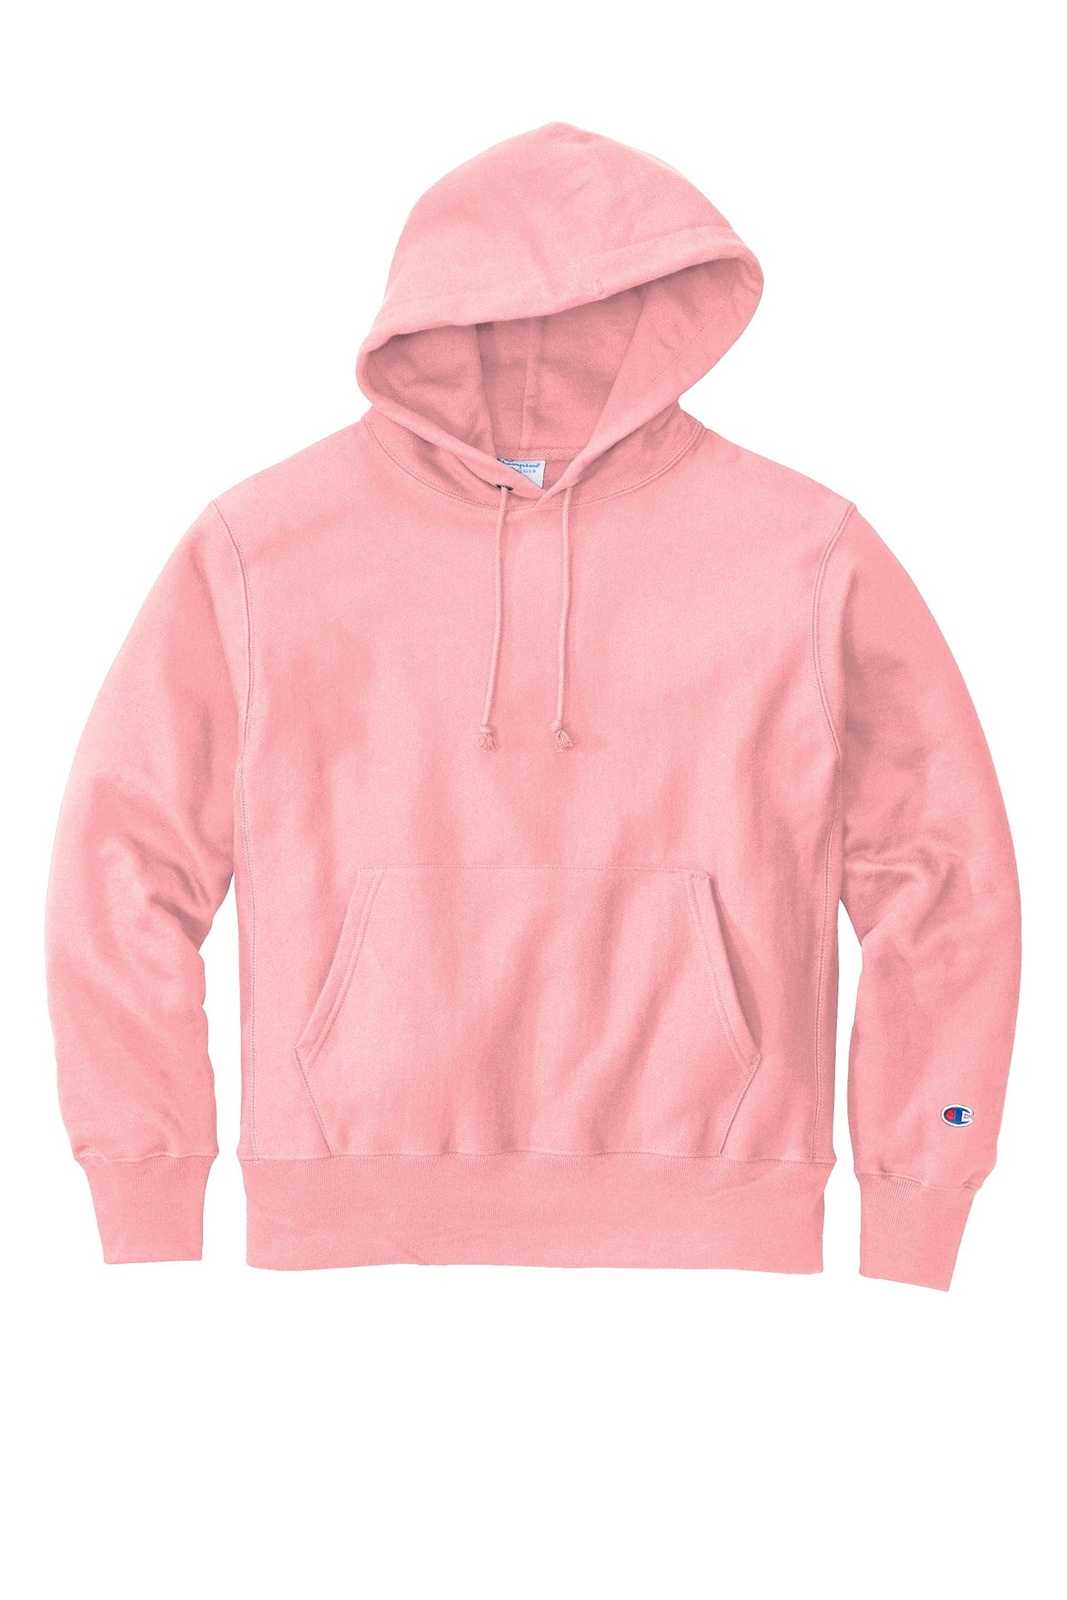 Weave Hooded Sweatshirt - Pink Candy